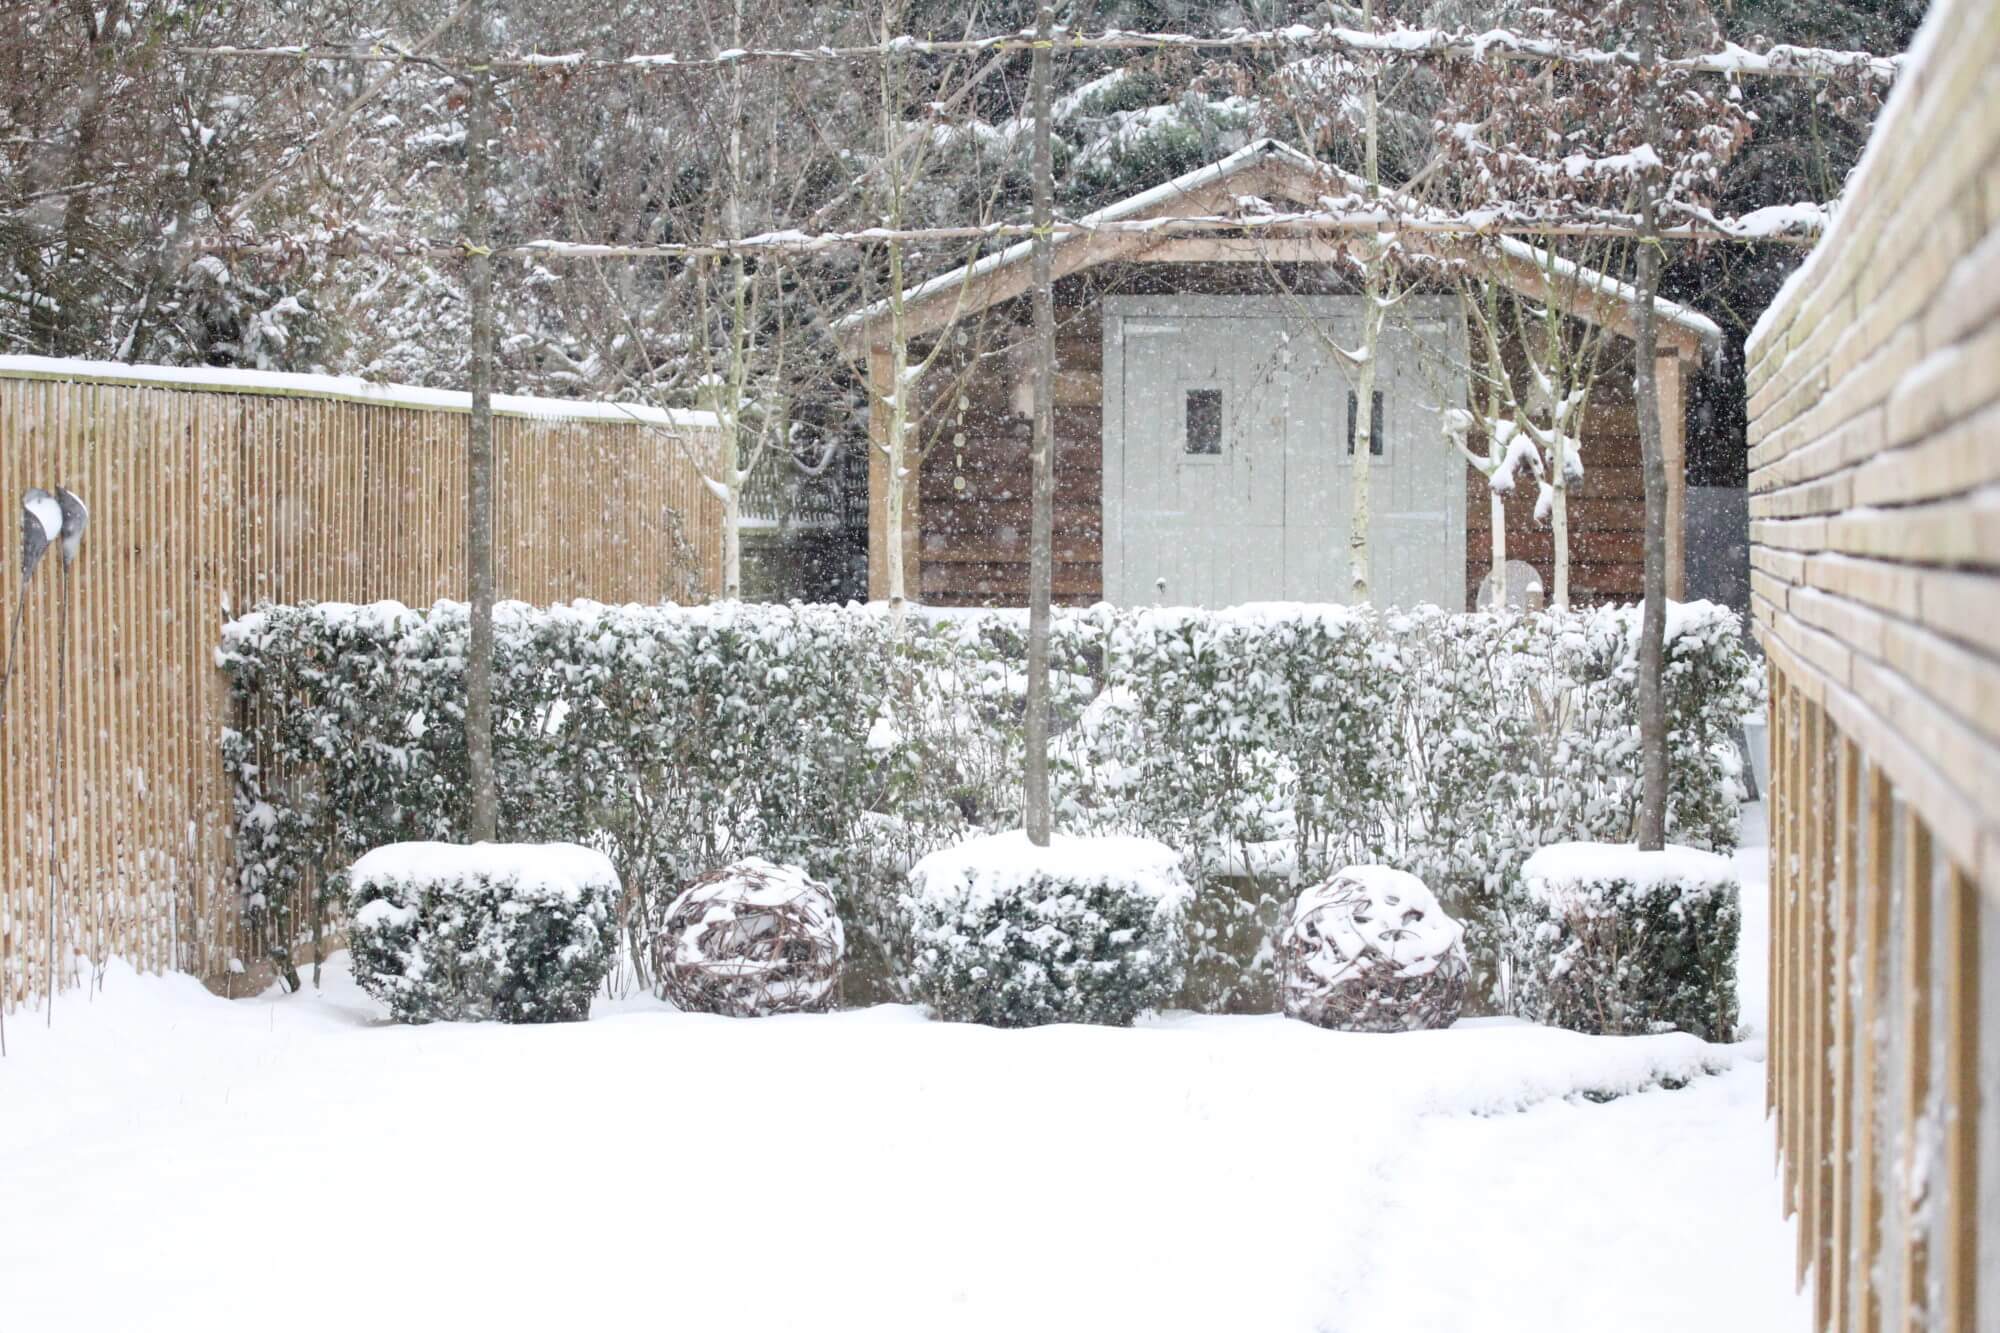 garden studio in a garden covered in snow